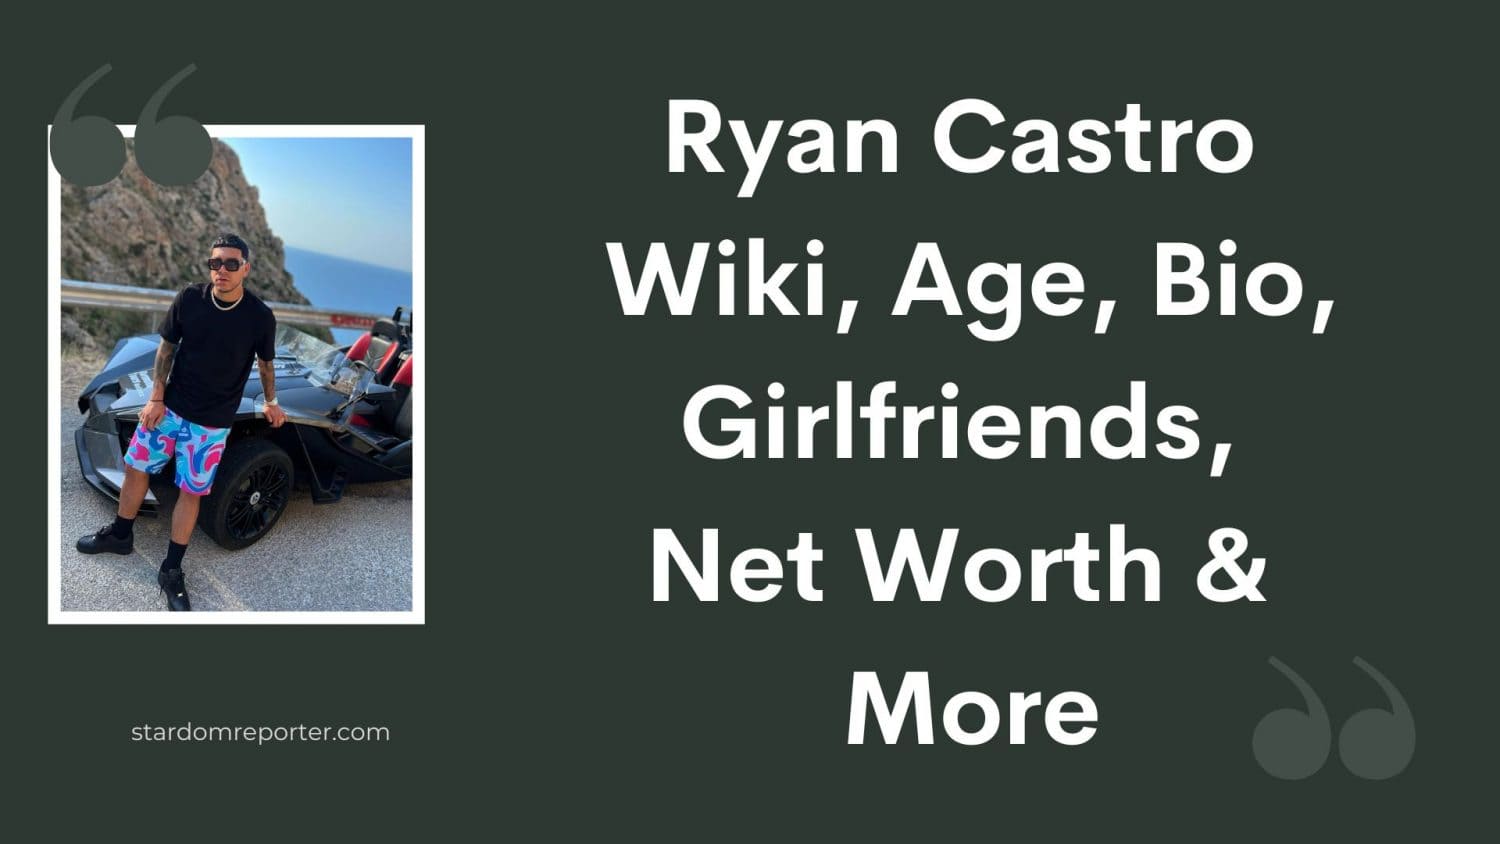 Ryan Castro Wiki, Age, Bio, Girlfriends, Net Worth & More - 39